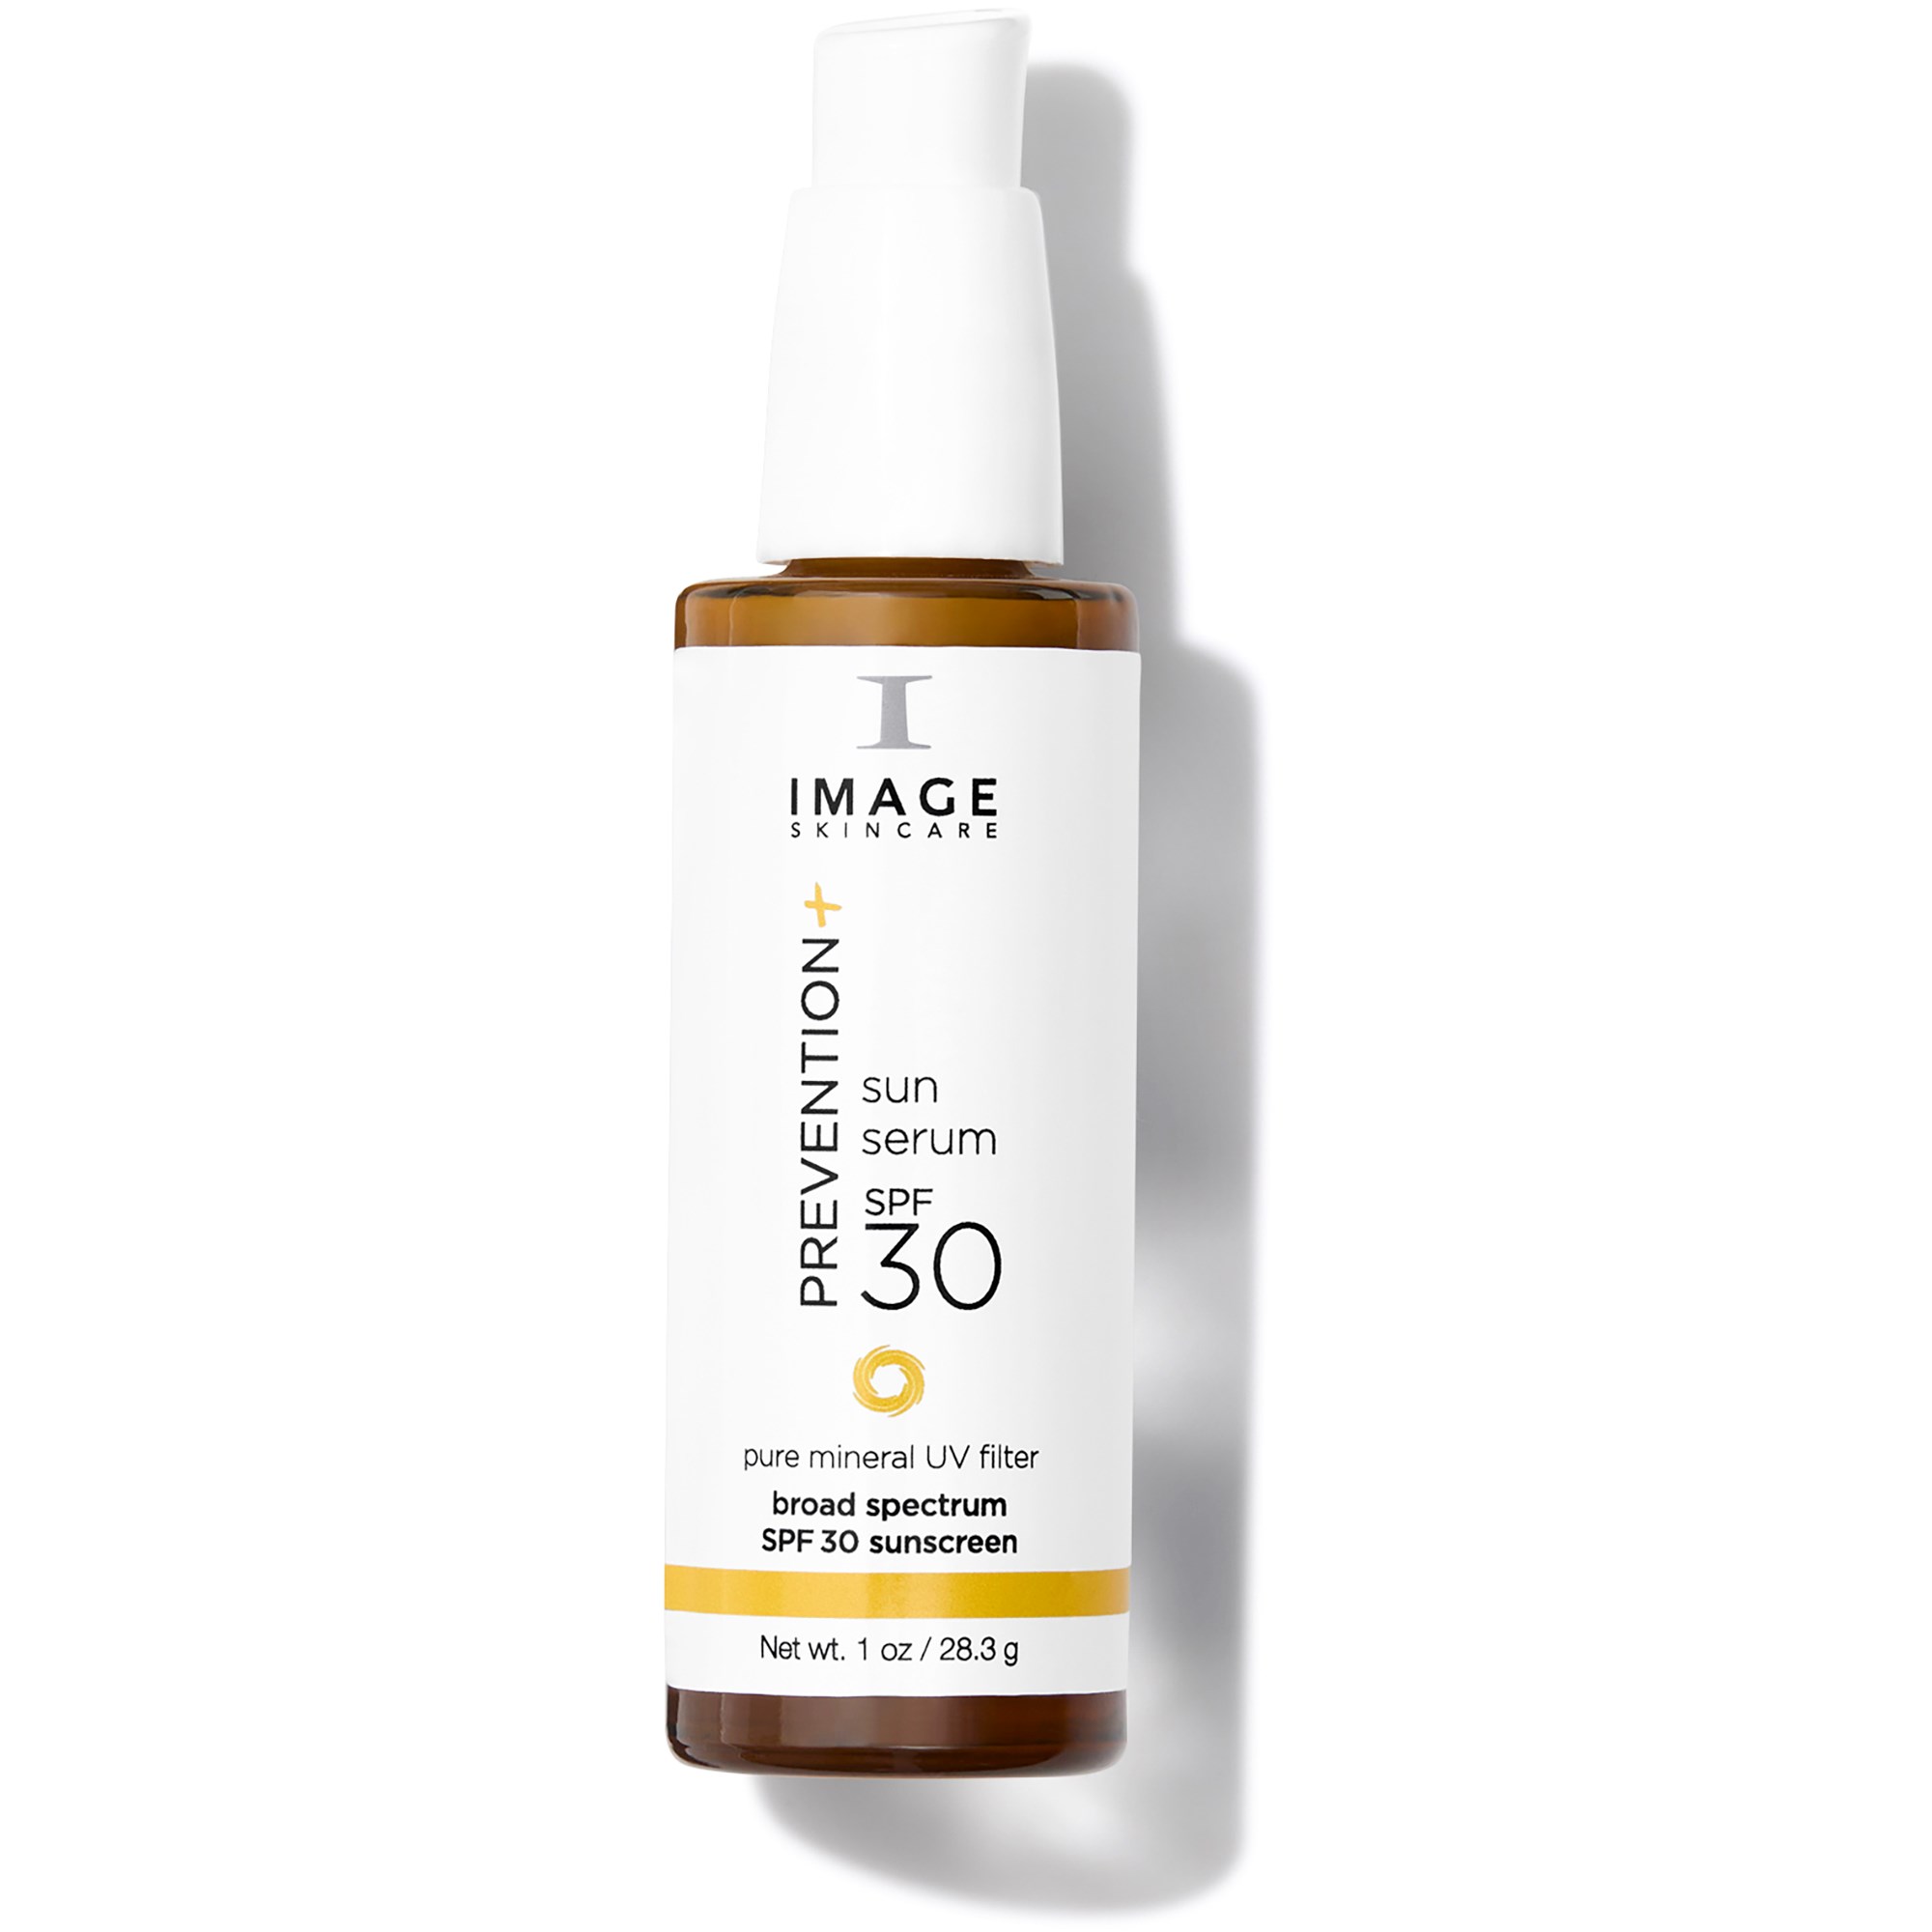 IMAGE Skincare Prevention+  Sun Serum SPF 30 28 g